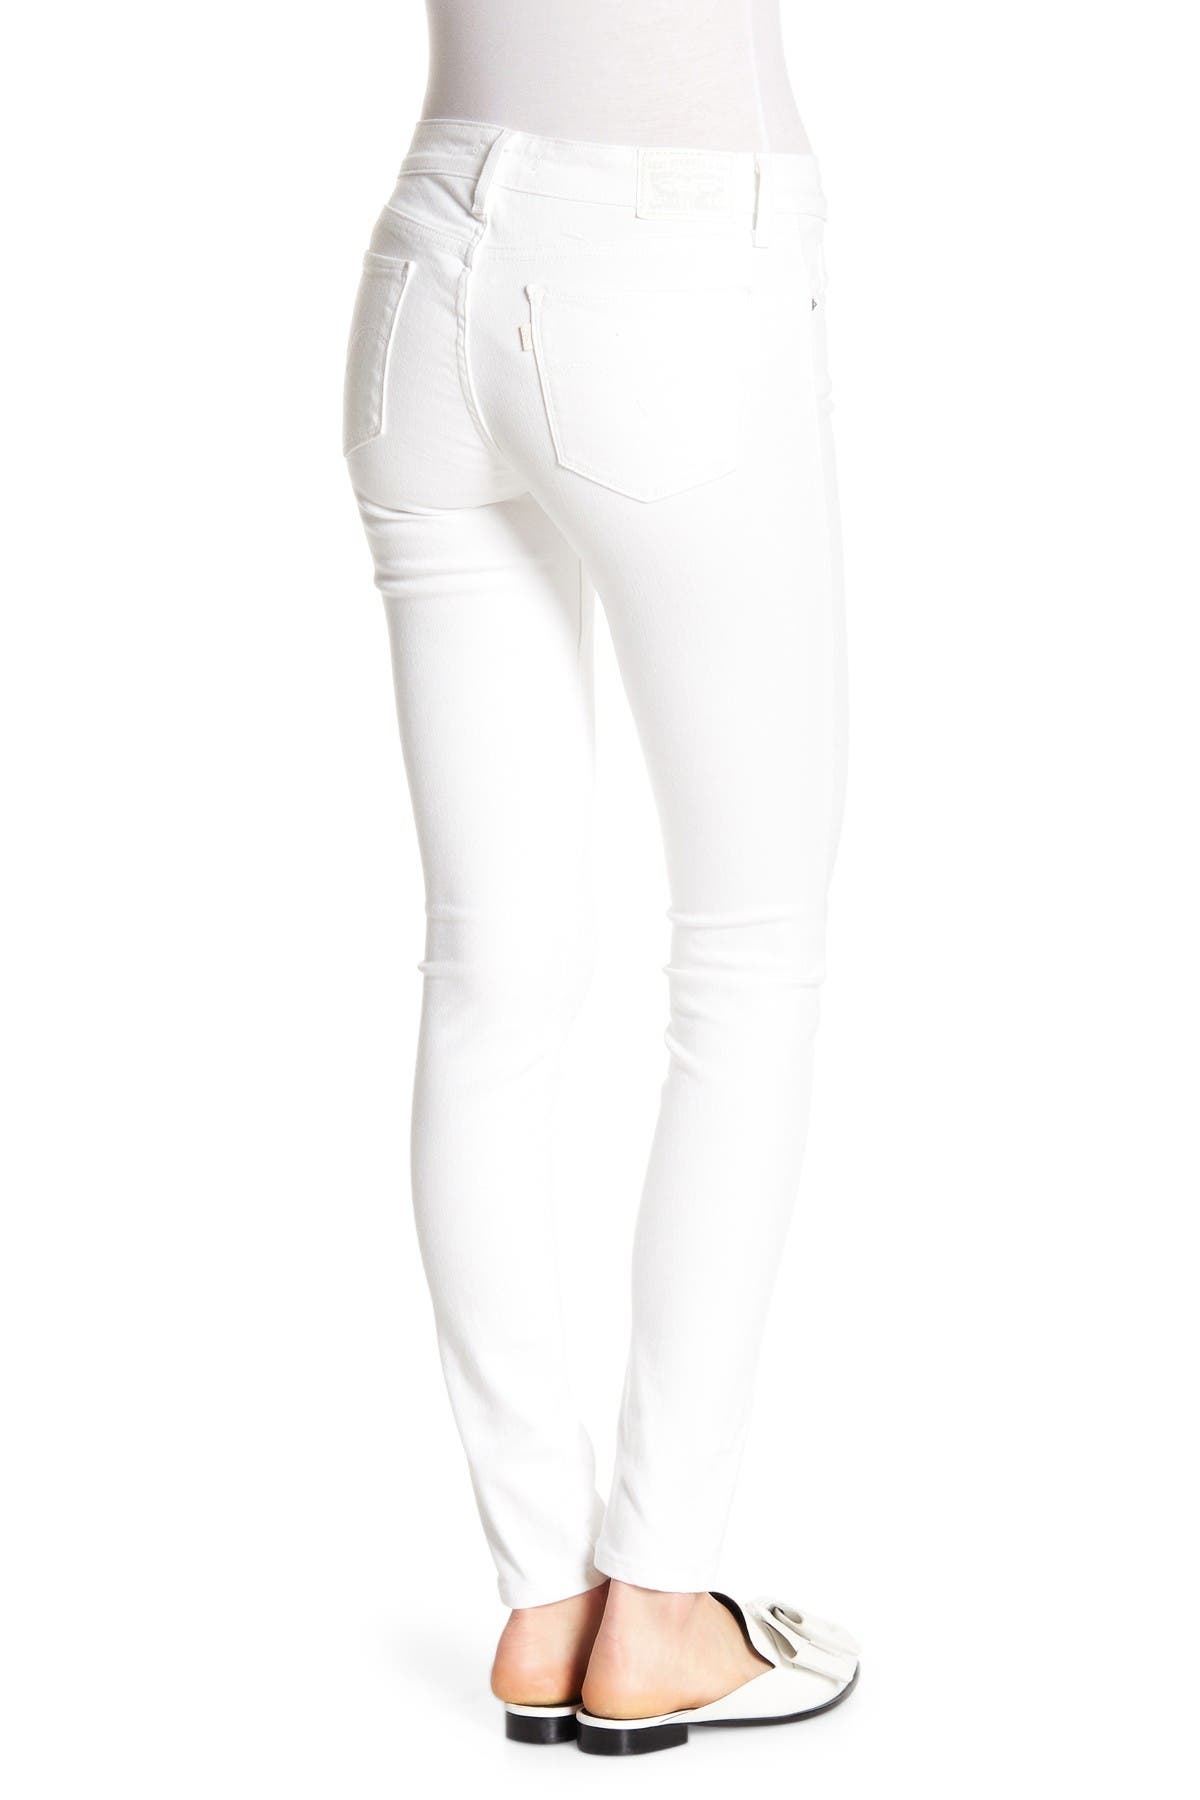 levi's 711 skinny jeans white